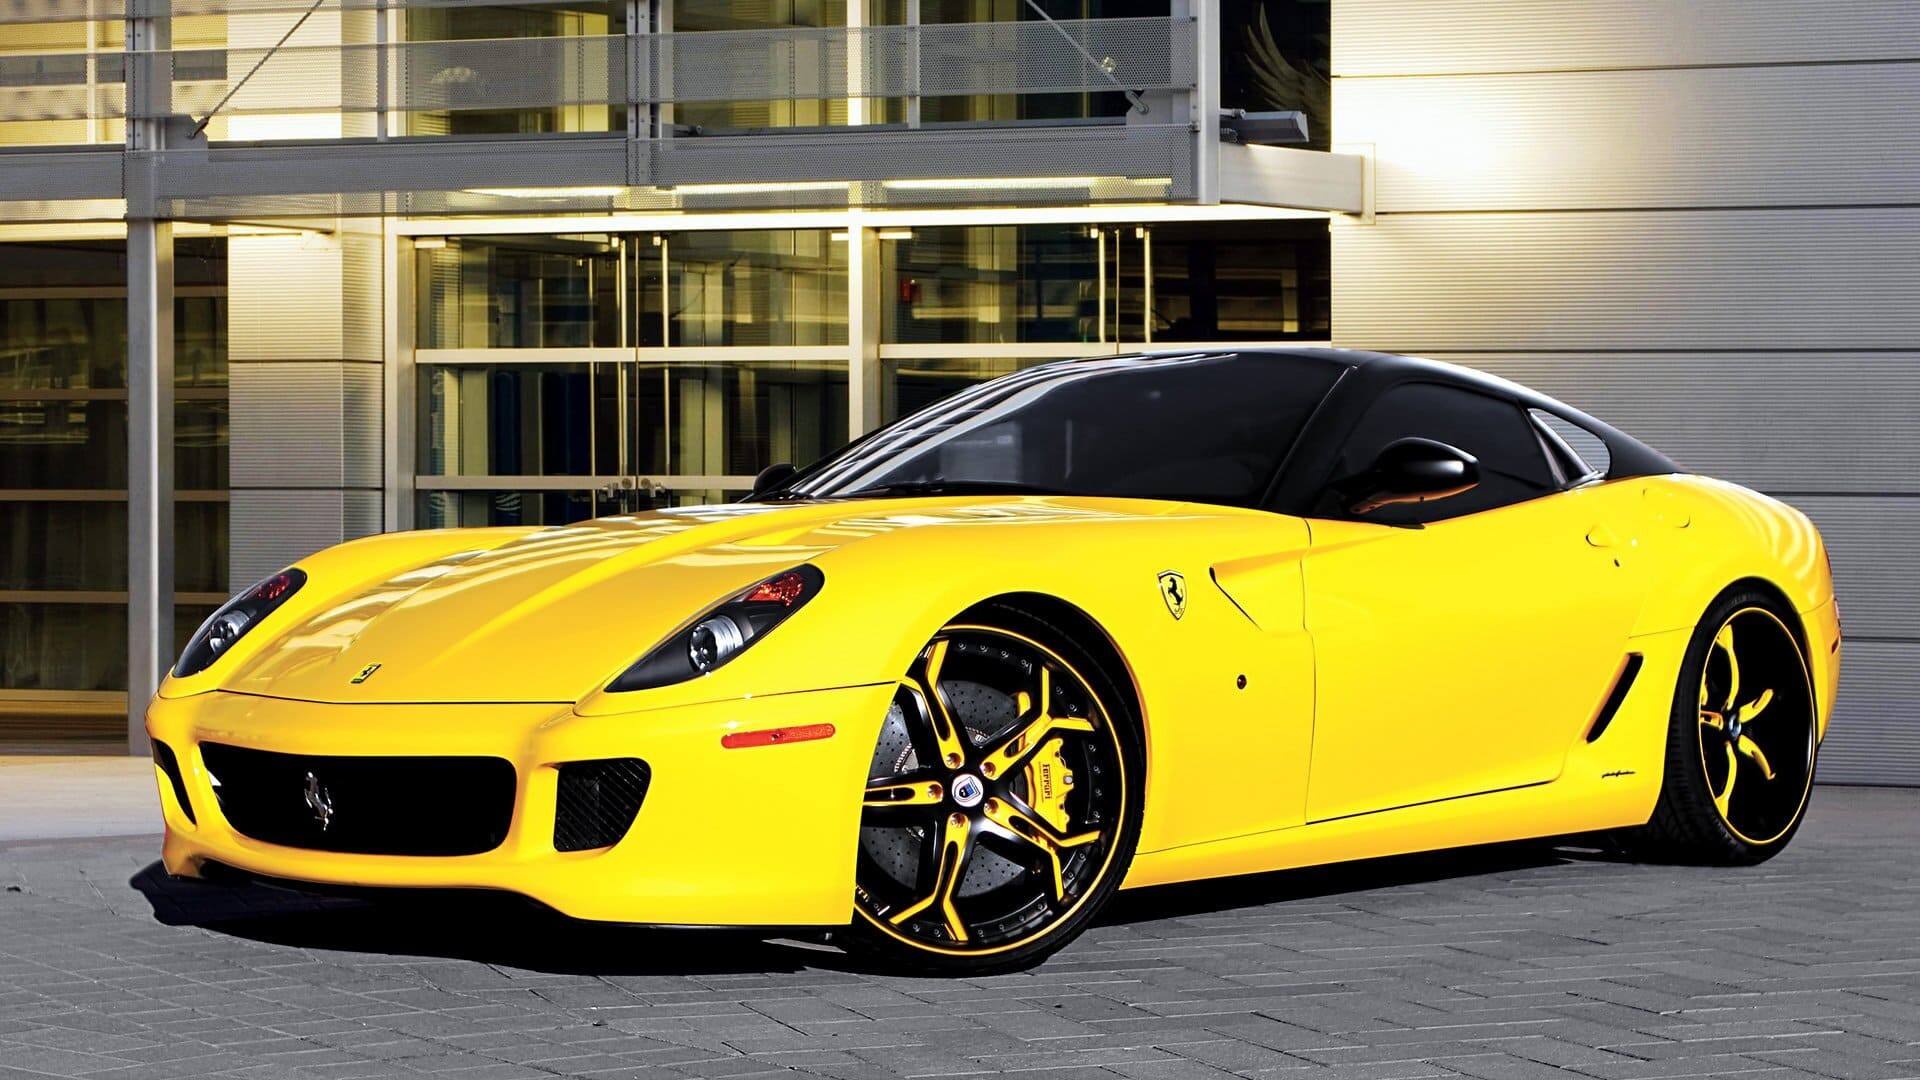 Ferrari: 599 GTB Fiorano, Styled by Pininfarina under the direction of Jason Castriota. 1920x1080 Full HD Wallpaper.